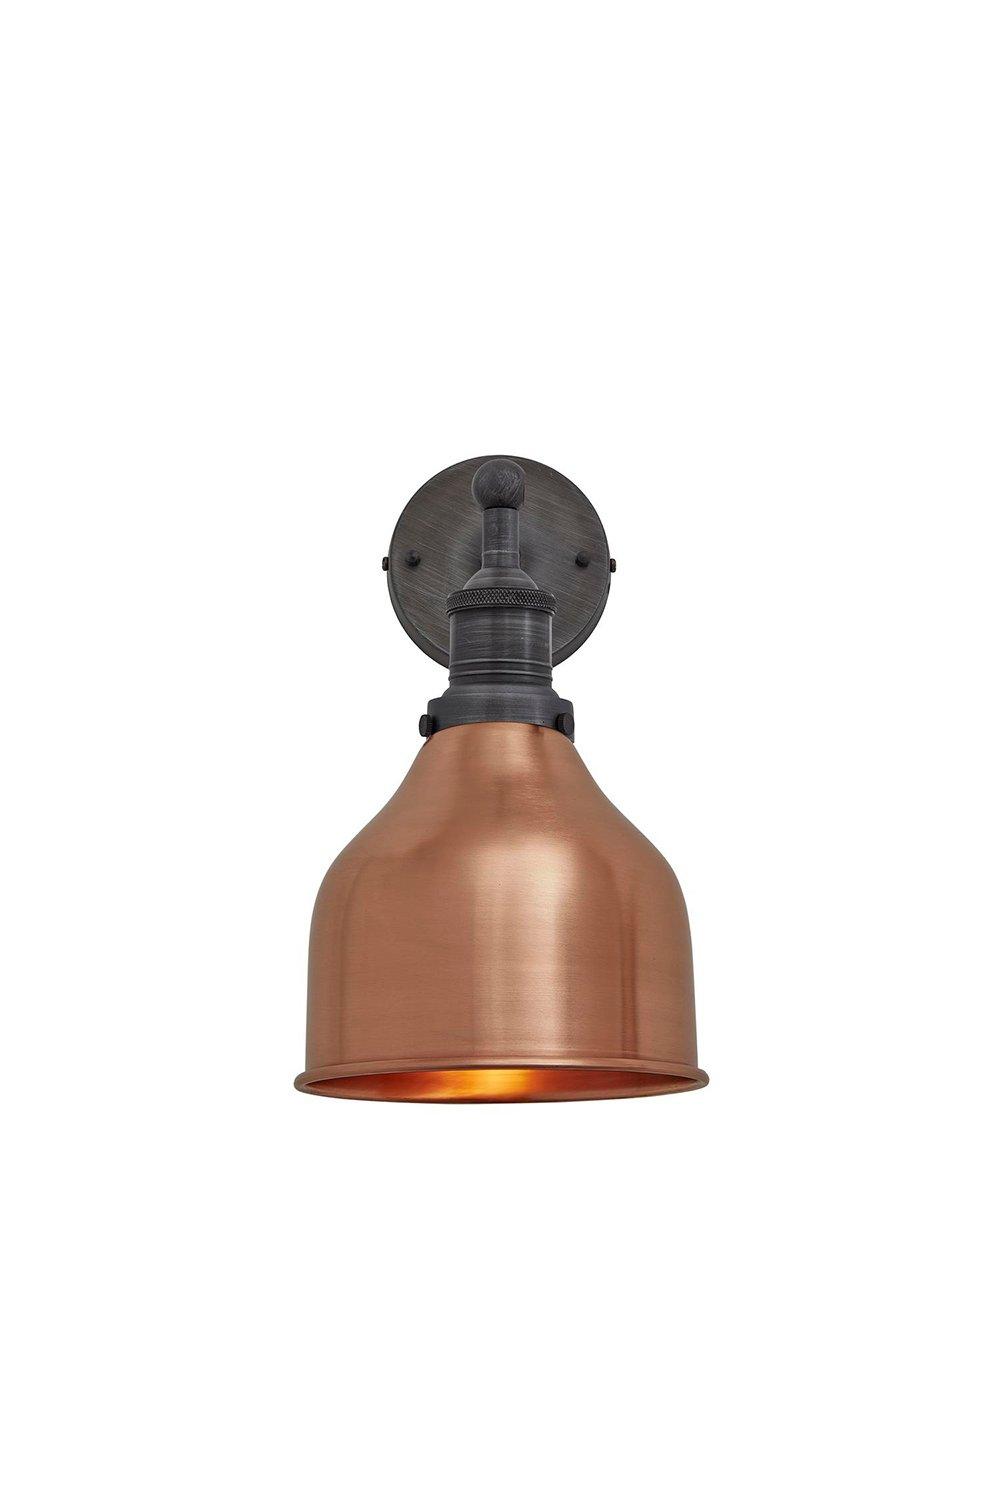 Brooklyn Cone Wall Light, 7 Inch, Copper- Pewter Holder